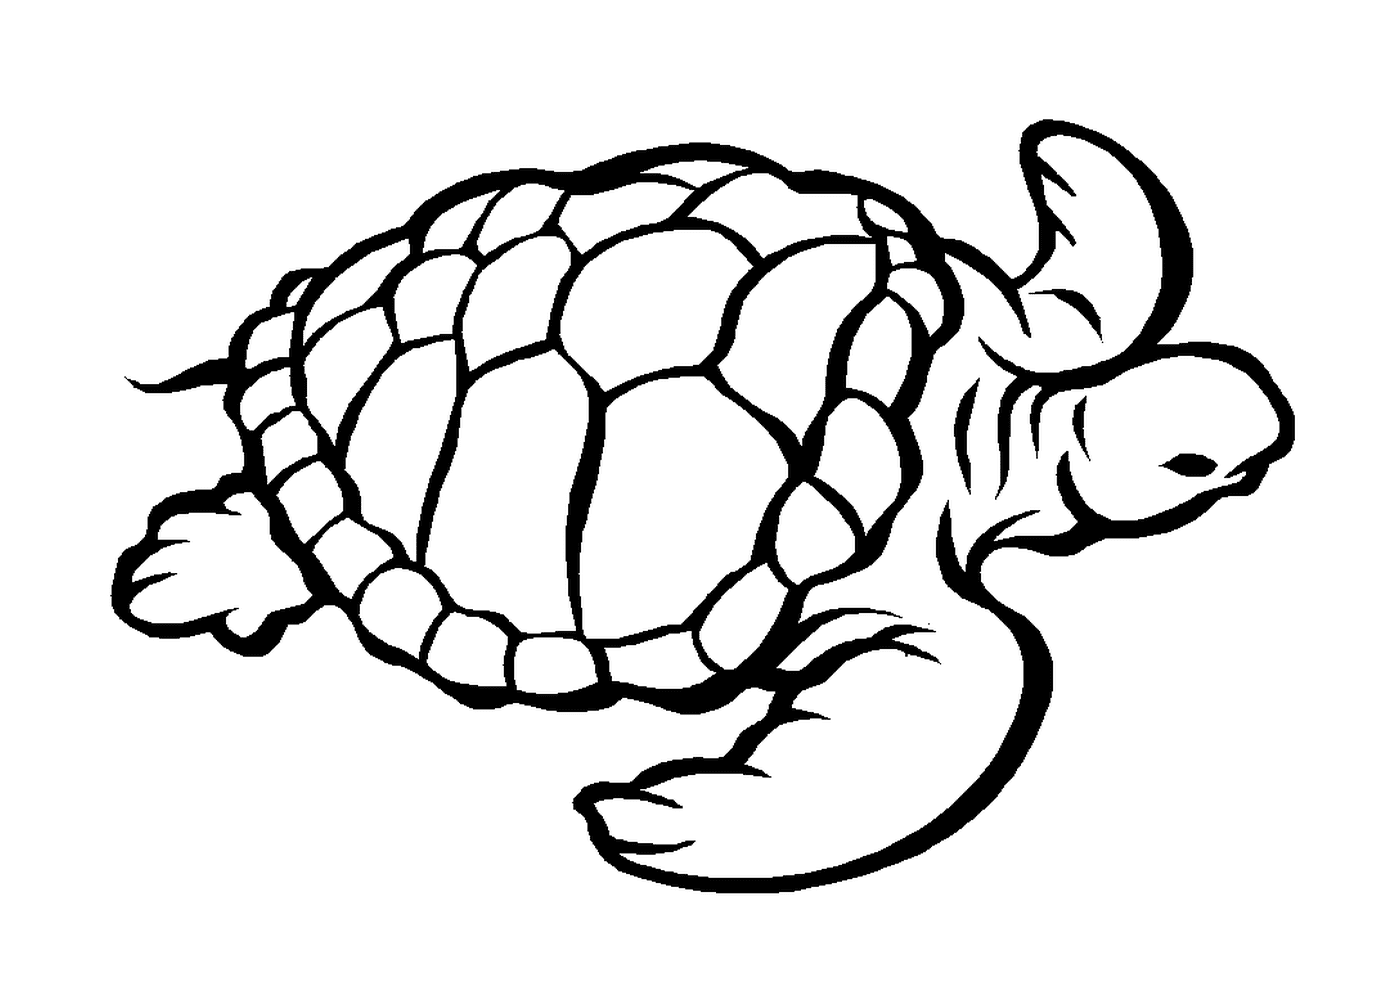  Tartaruga marinha 